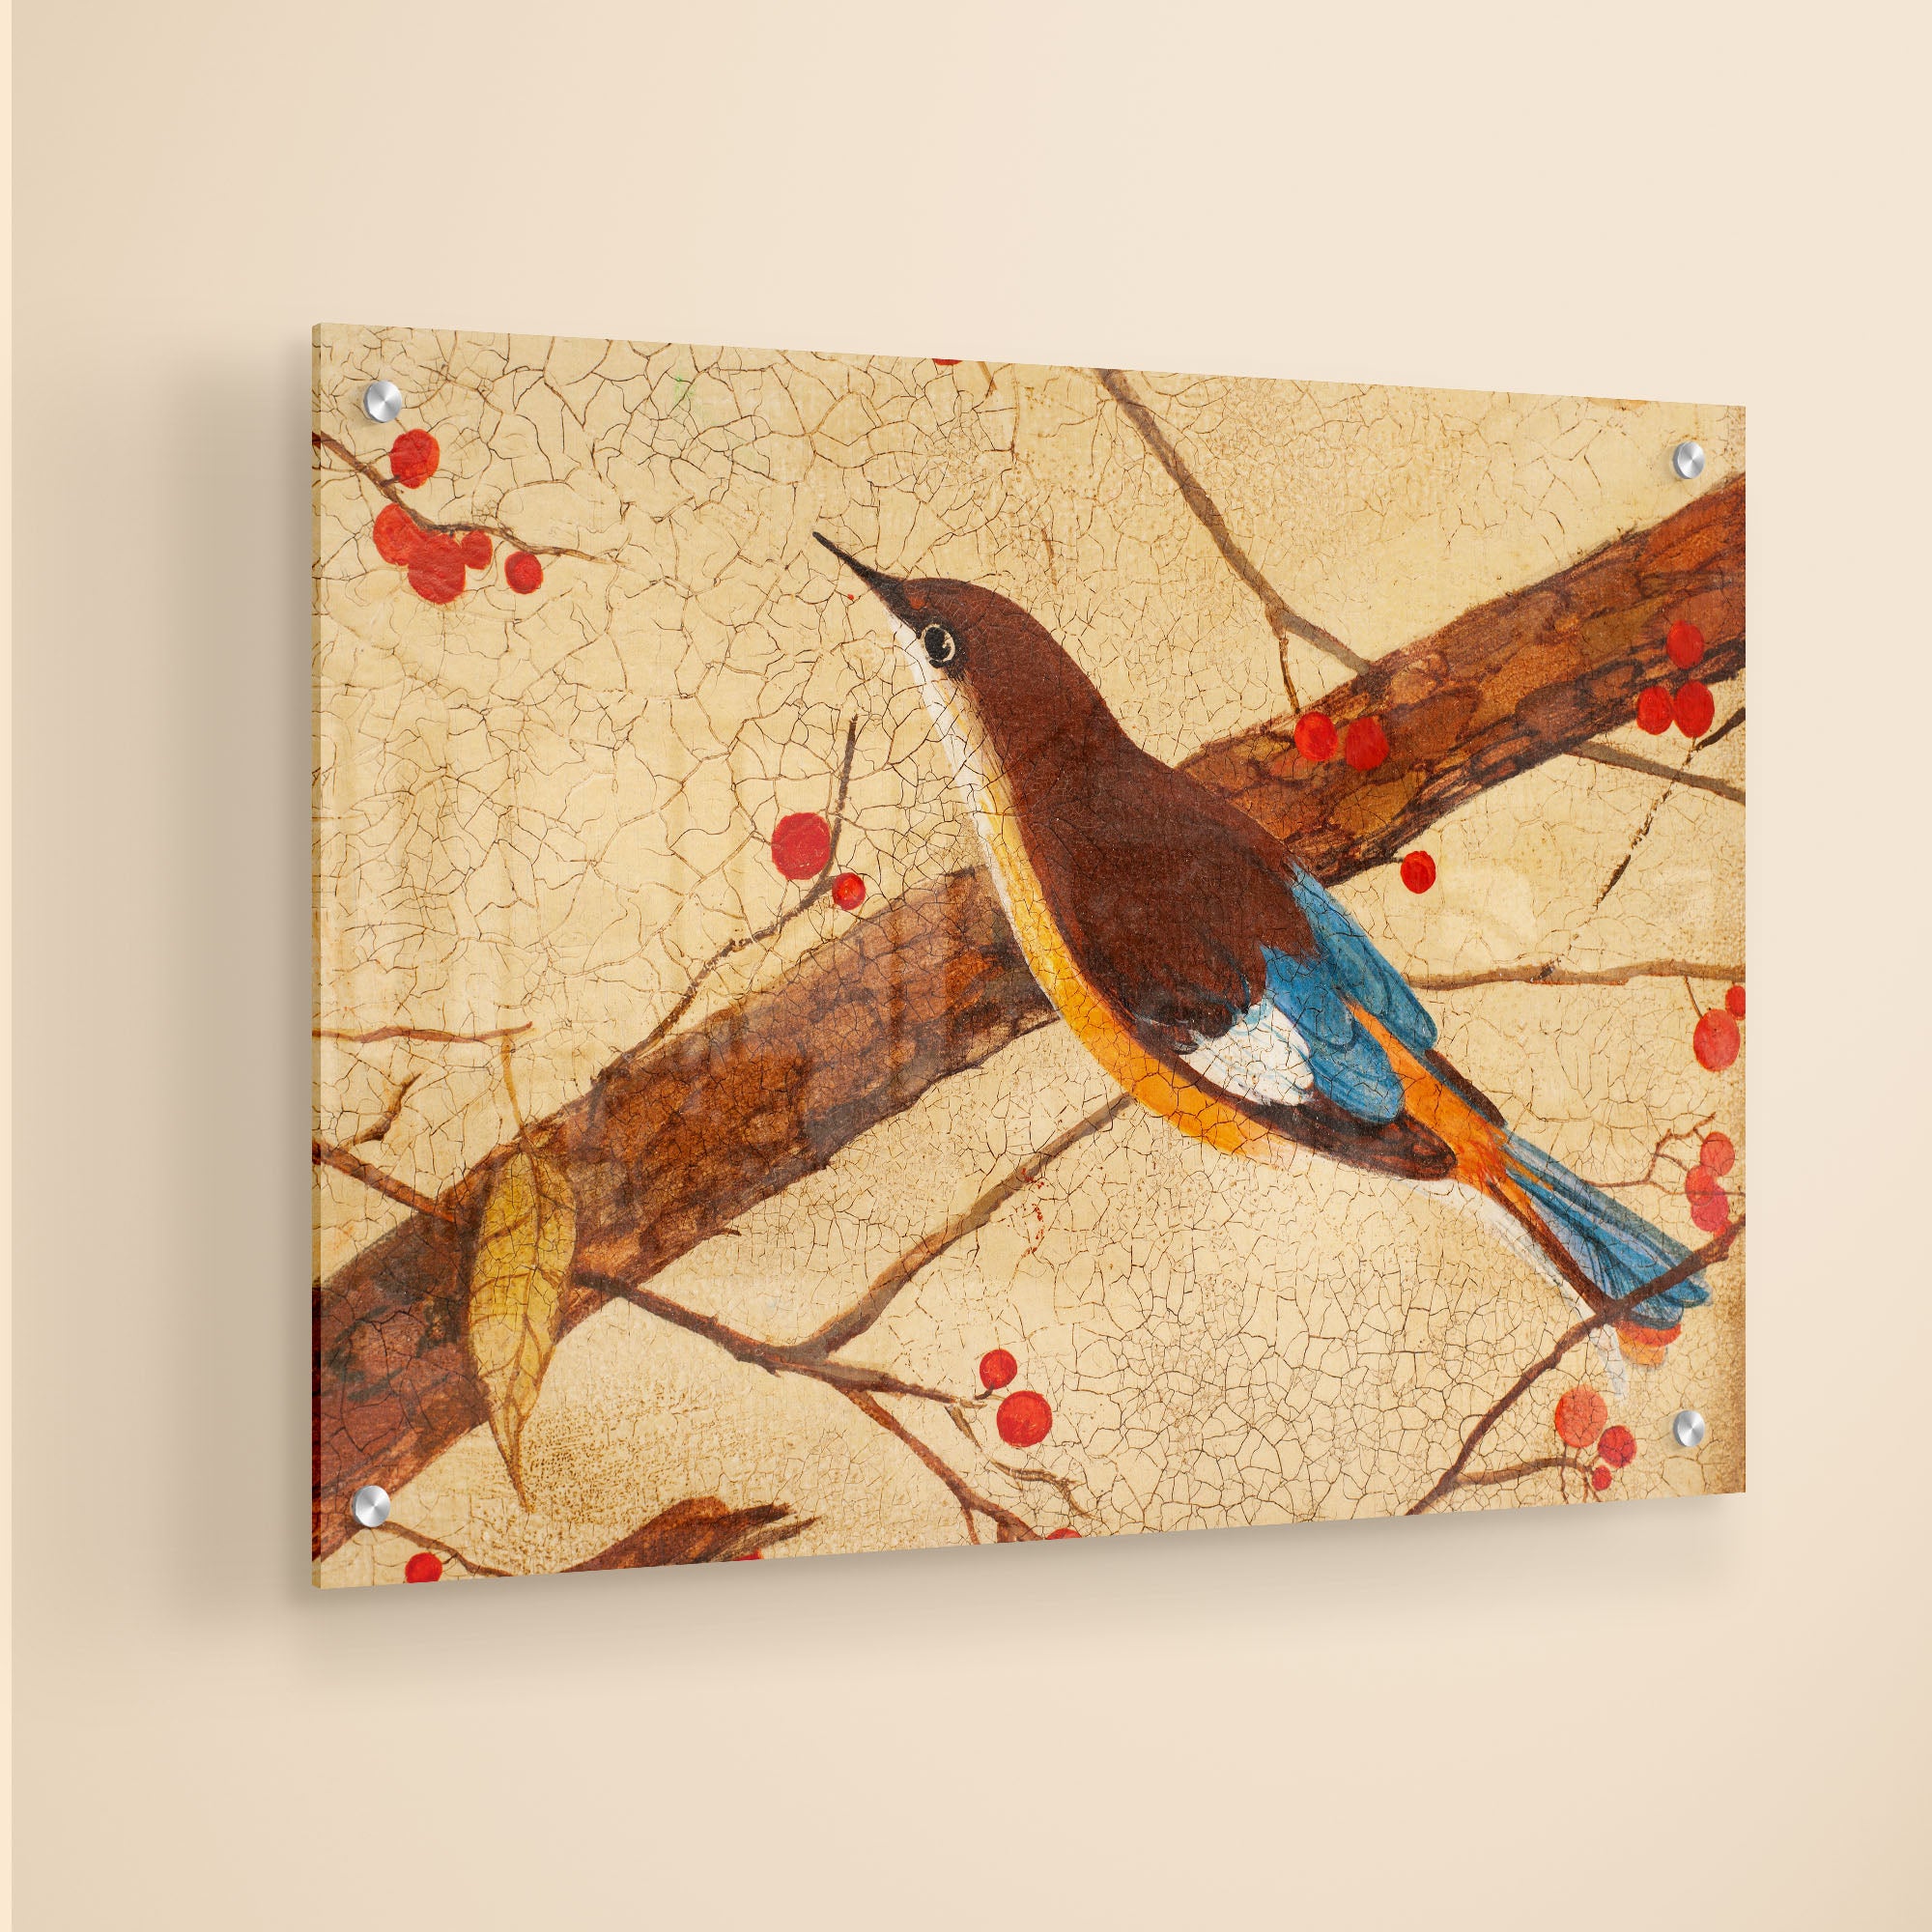 Abstract Bird Acrylic Wall Painting